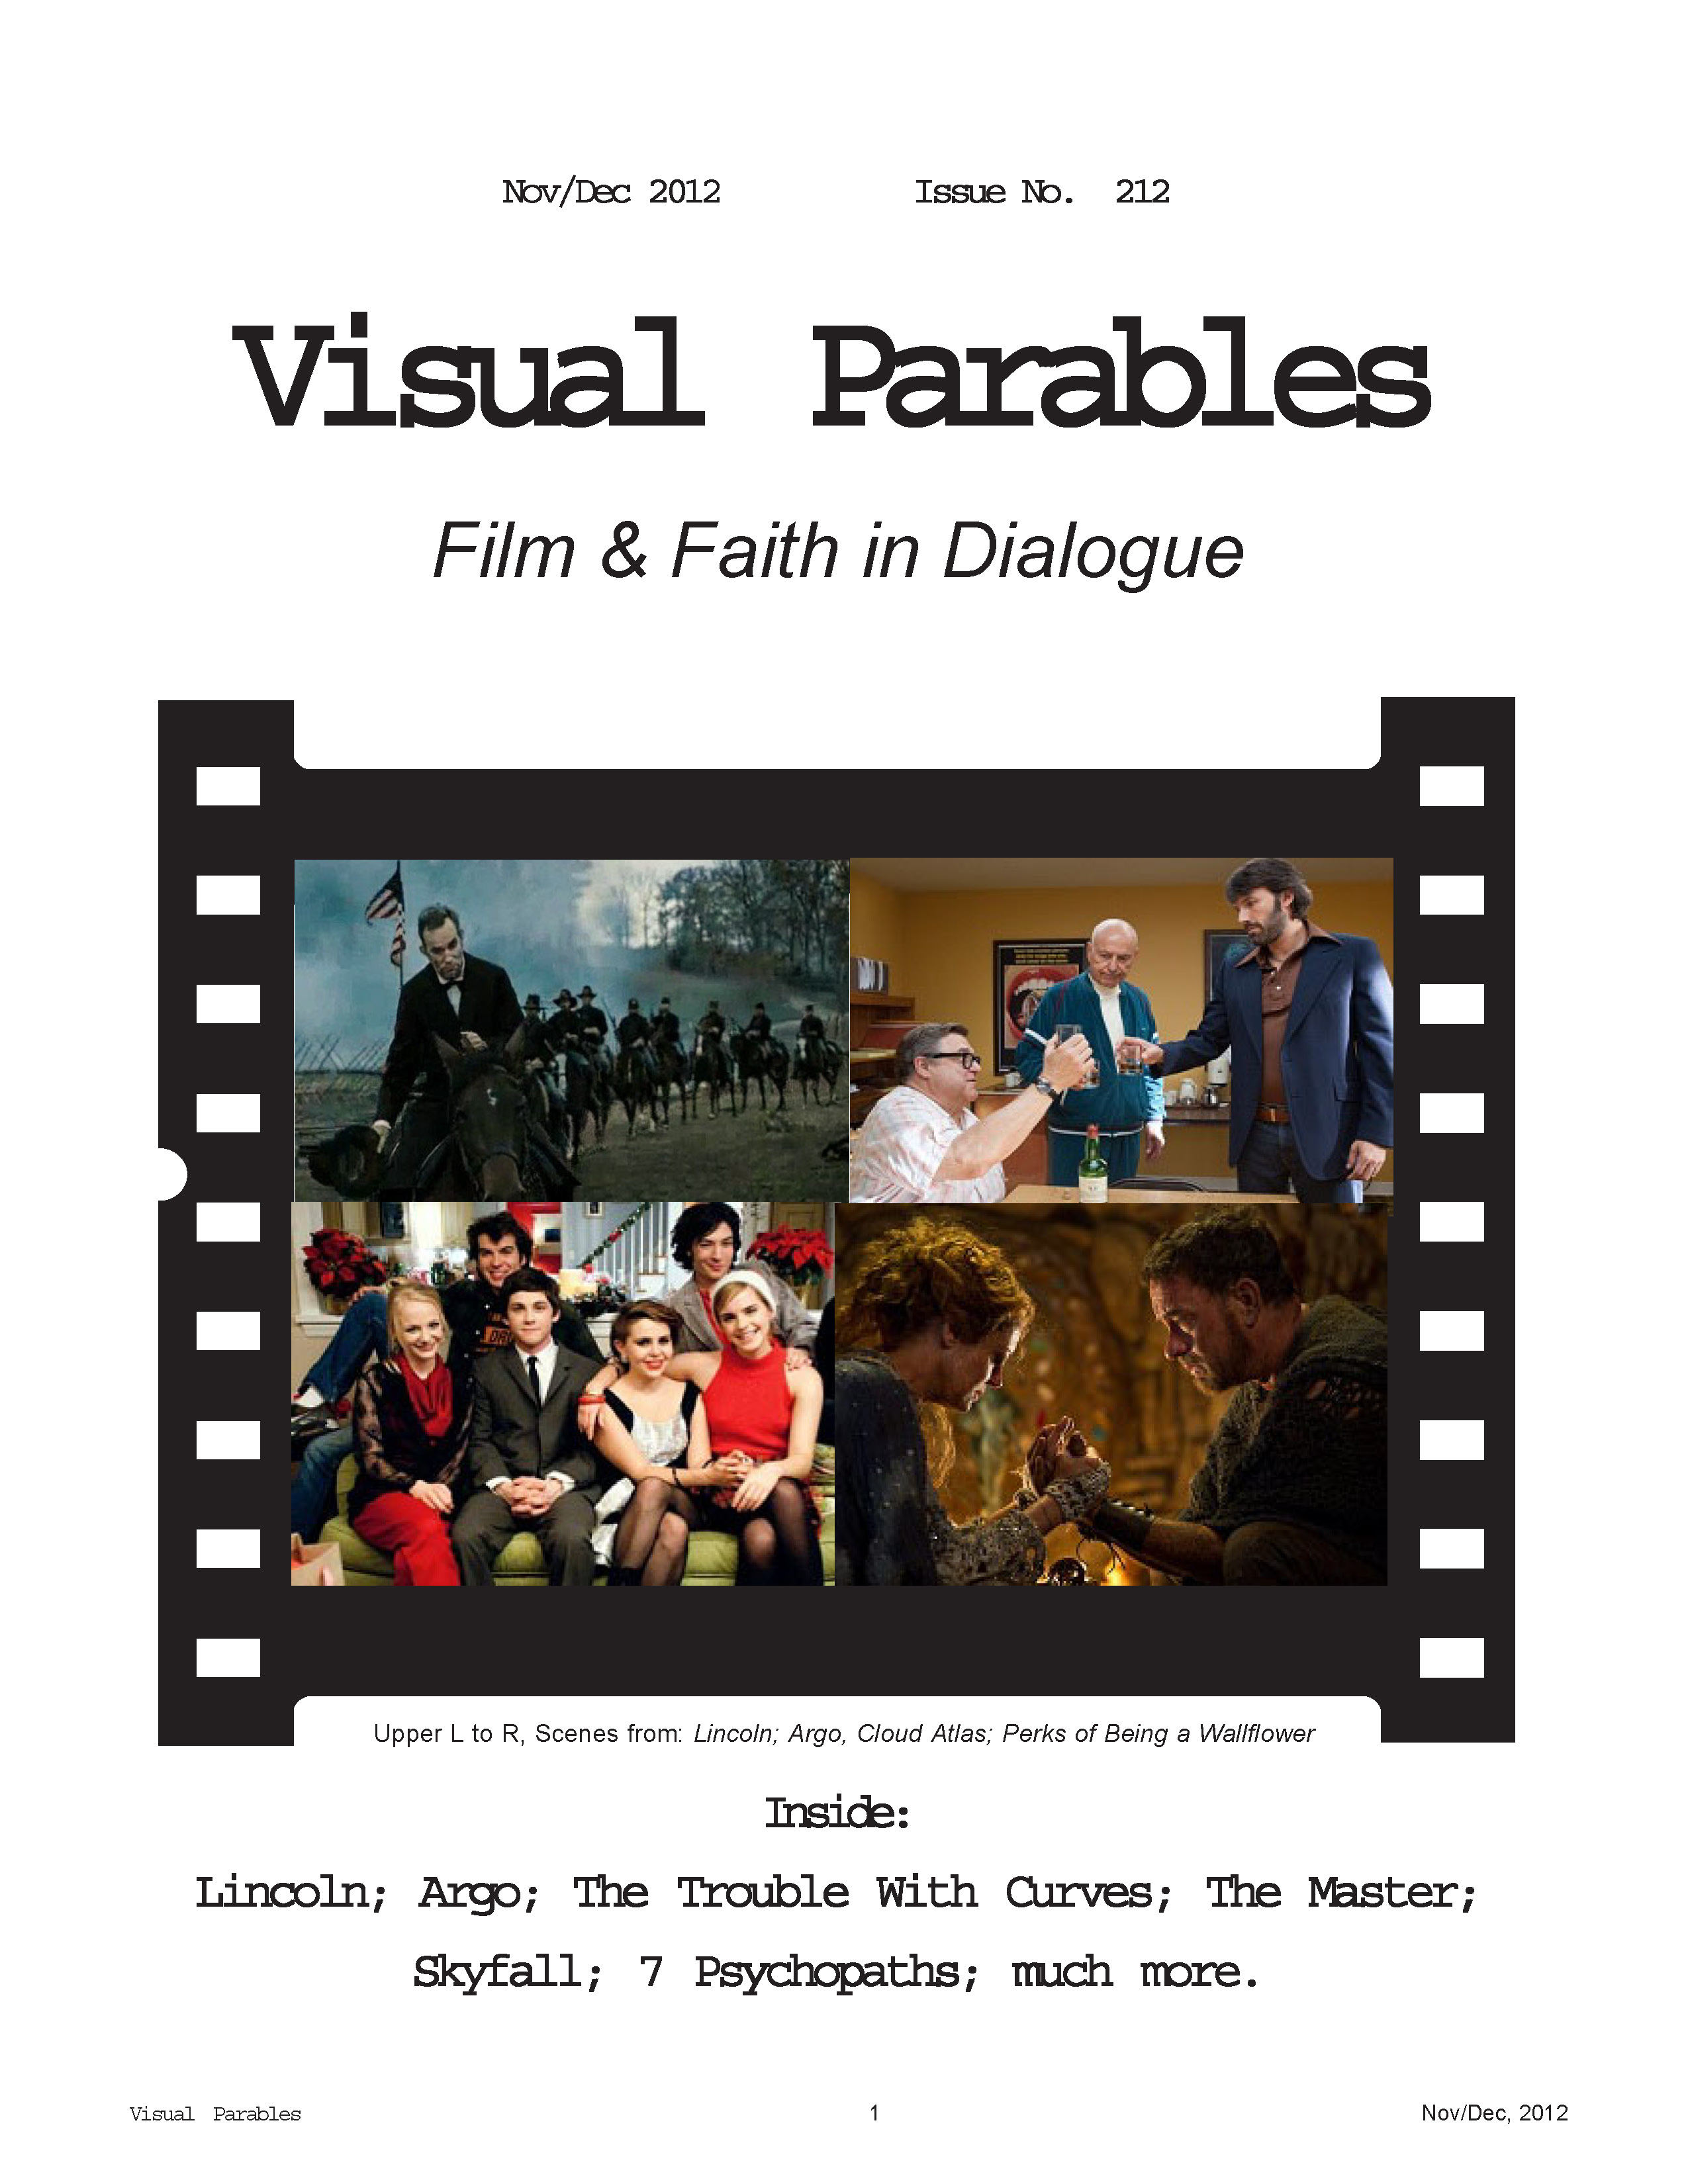 November/December 2012 issue of Visual Parables